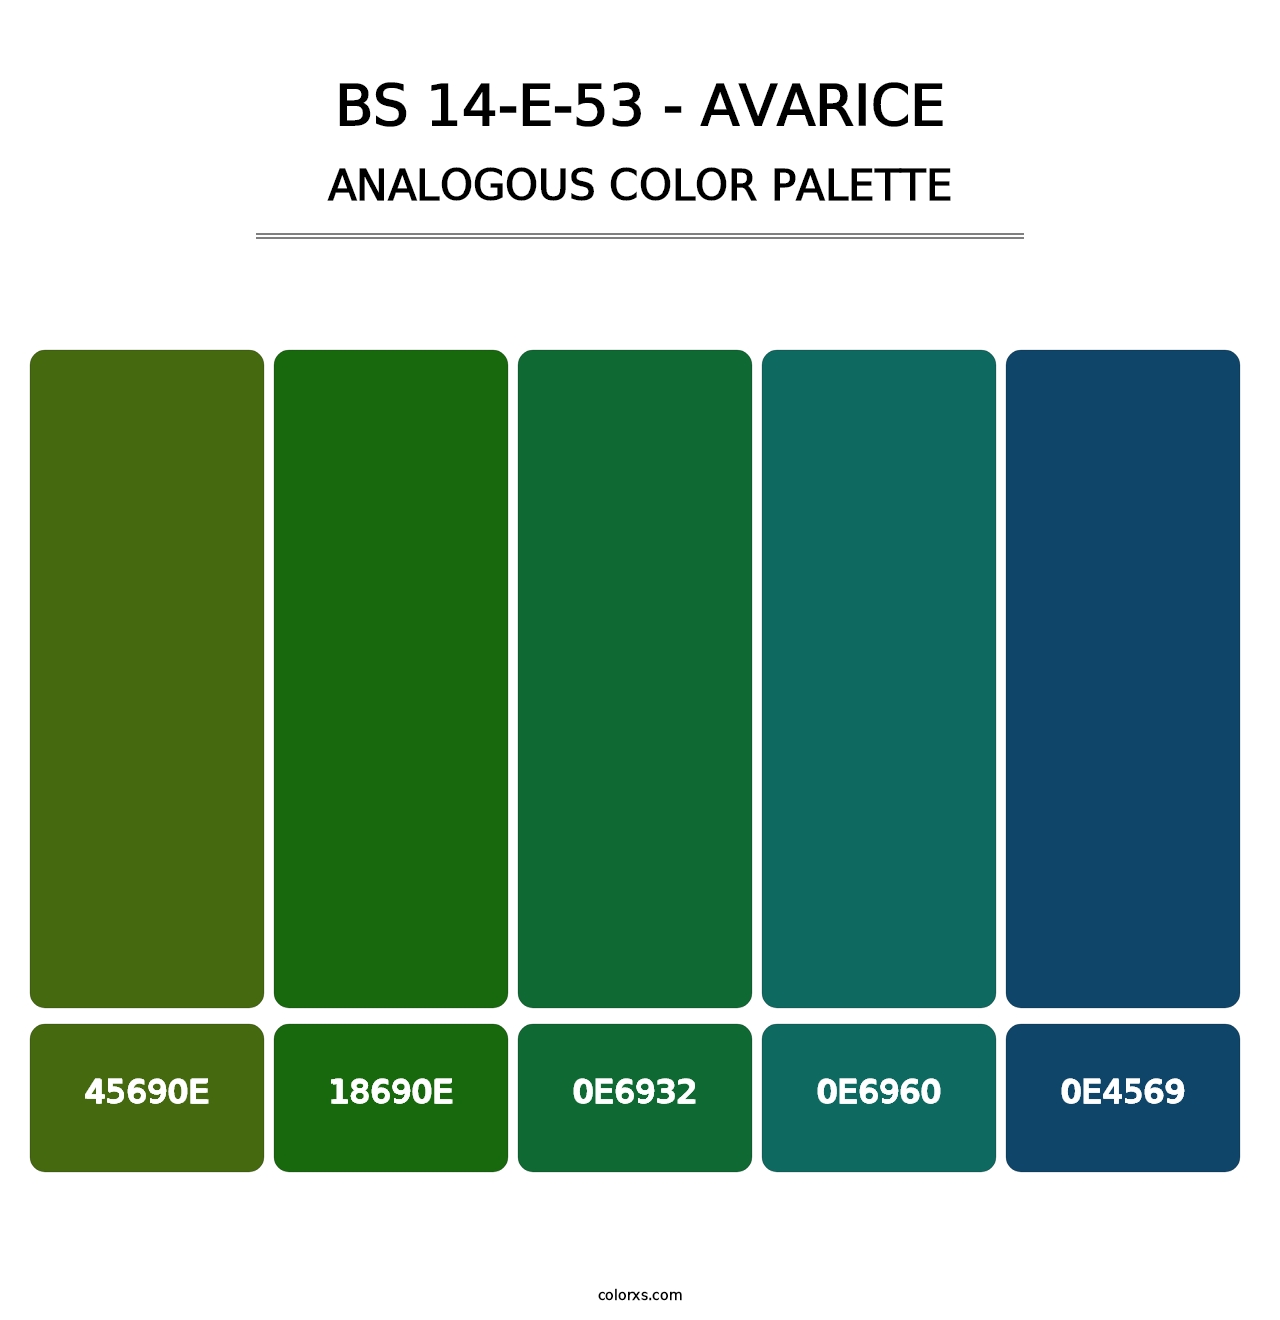 BS 14-E-53 - Avarice - Analogous Color Palette